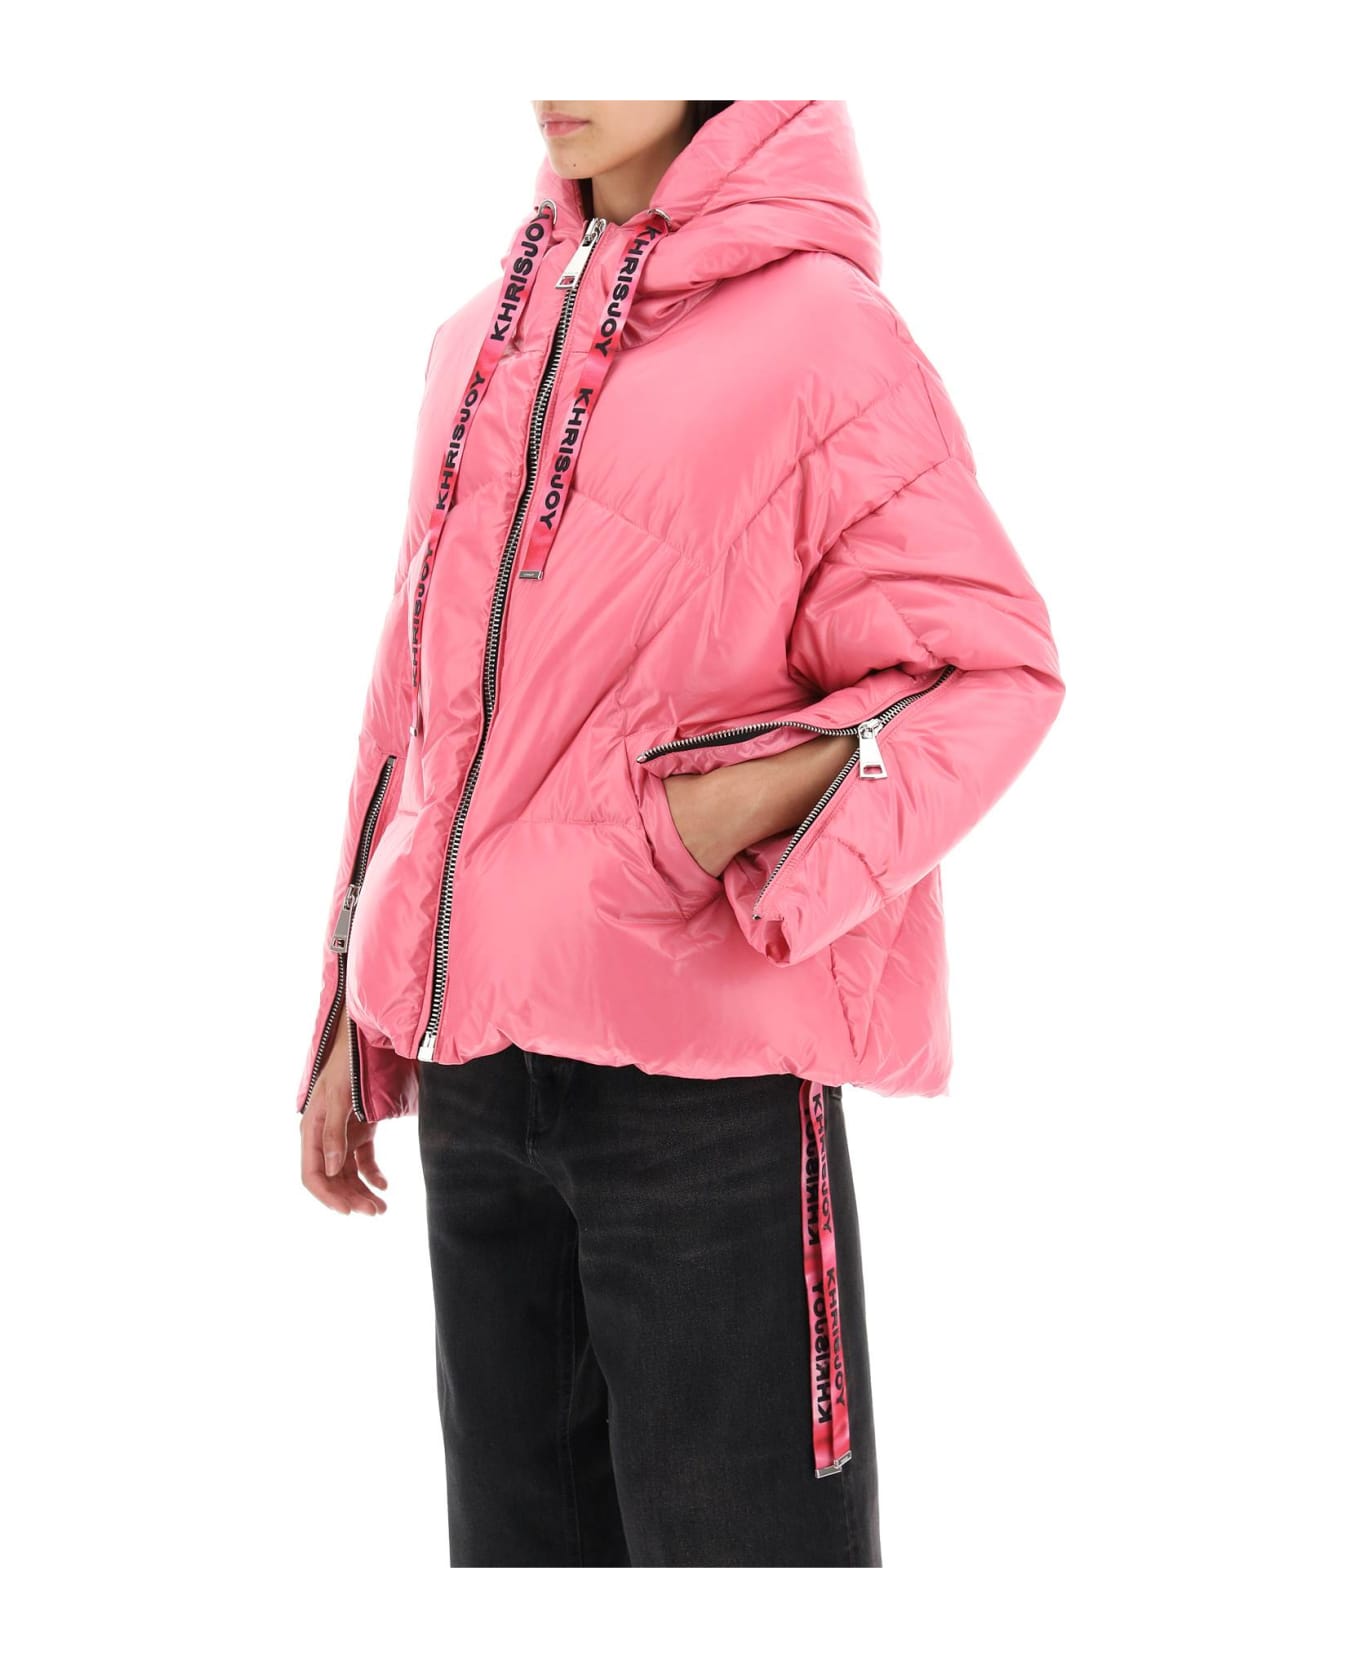 Khrisjoy Khris Iconic Shiny Puffer Jacket - RASPBERRY (Pink)